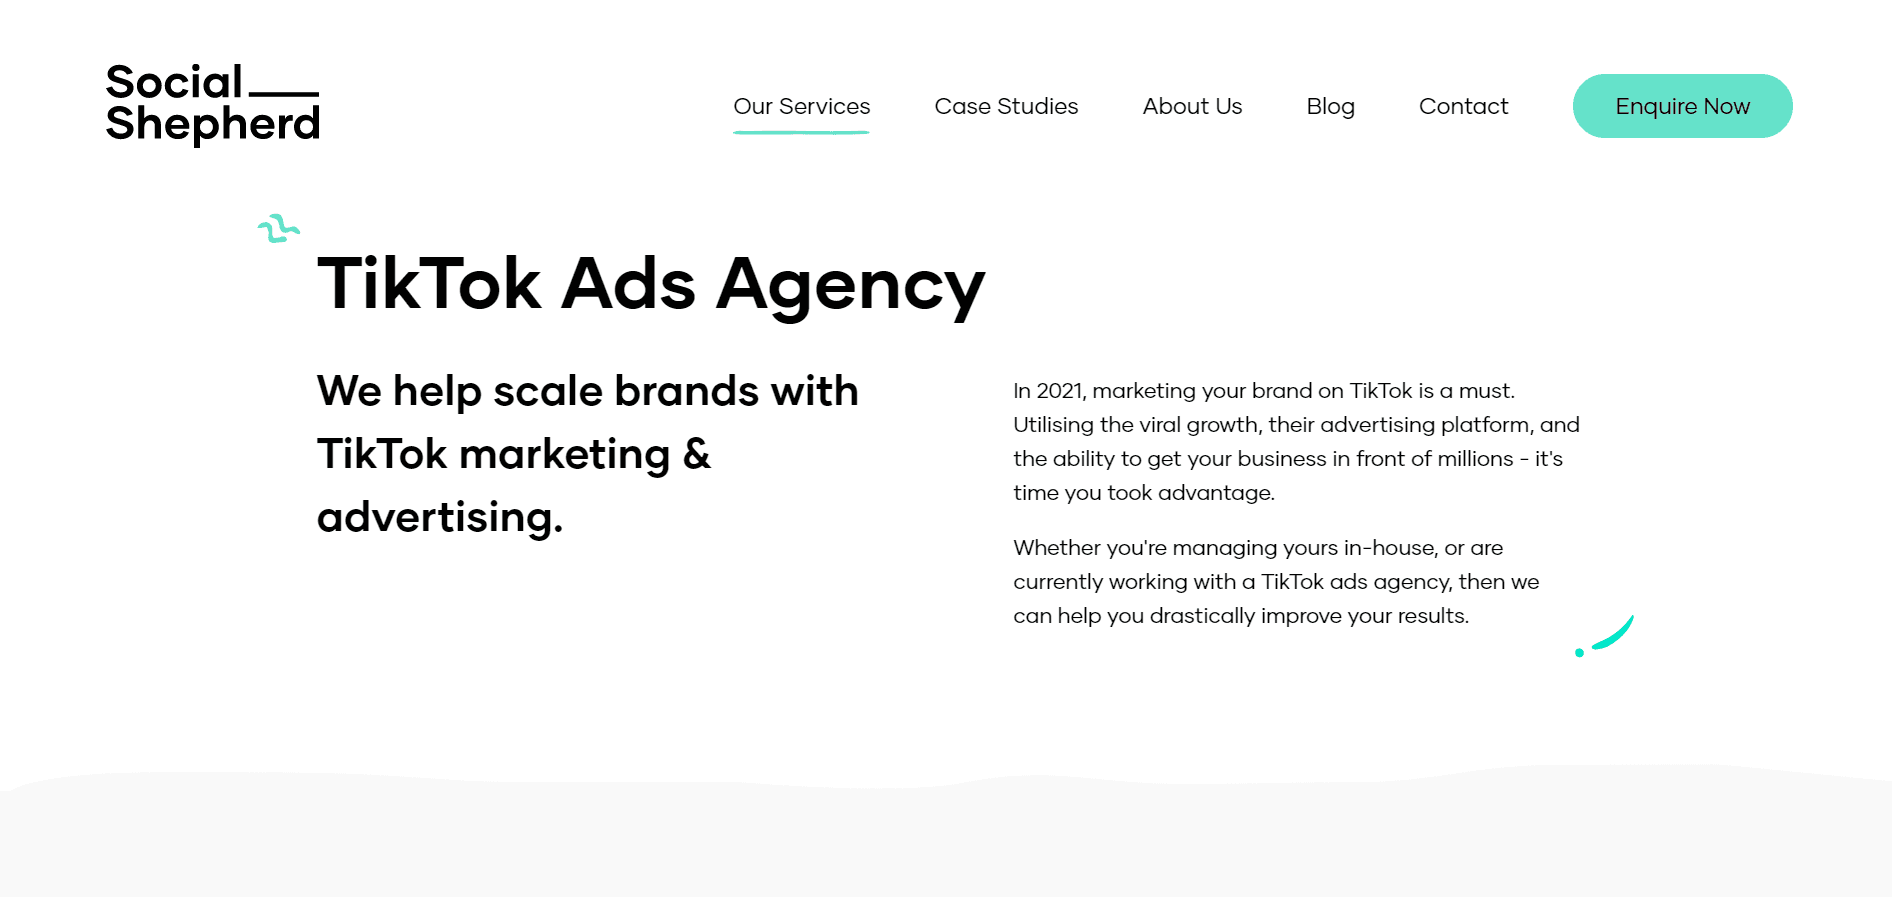 Top Results-Driven TikTok Marketing Agency